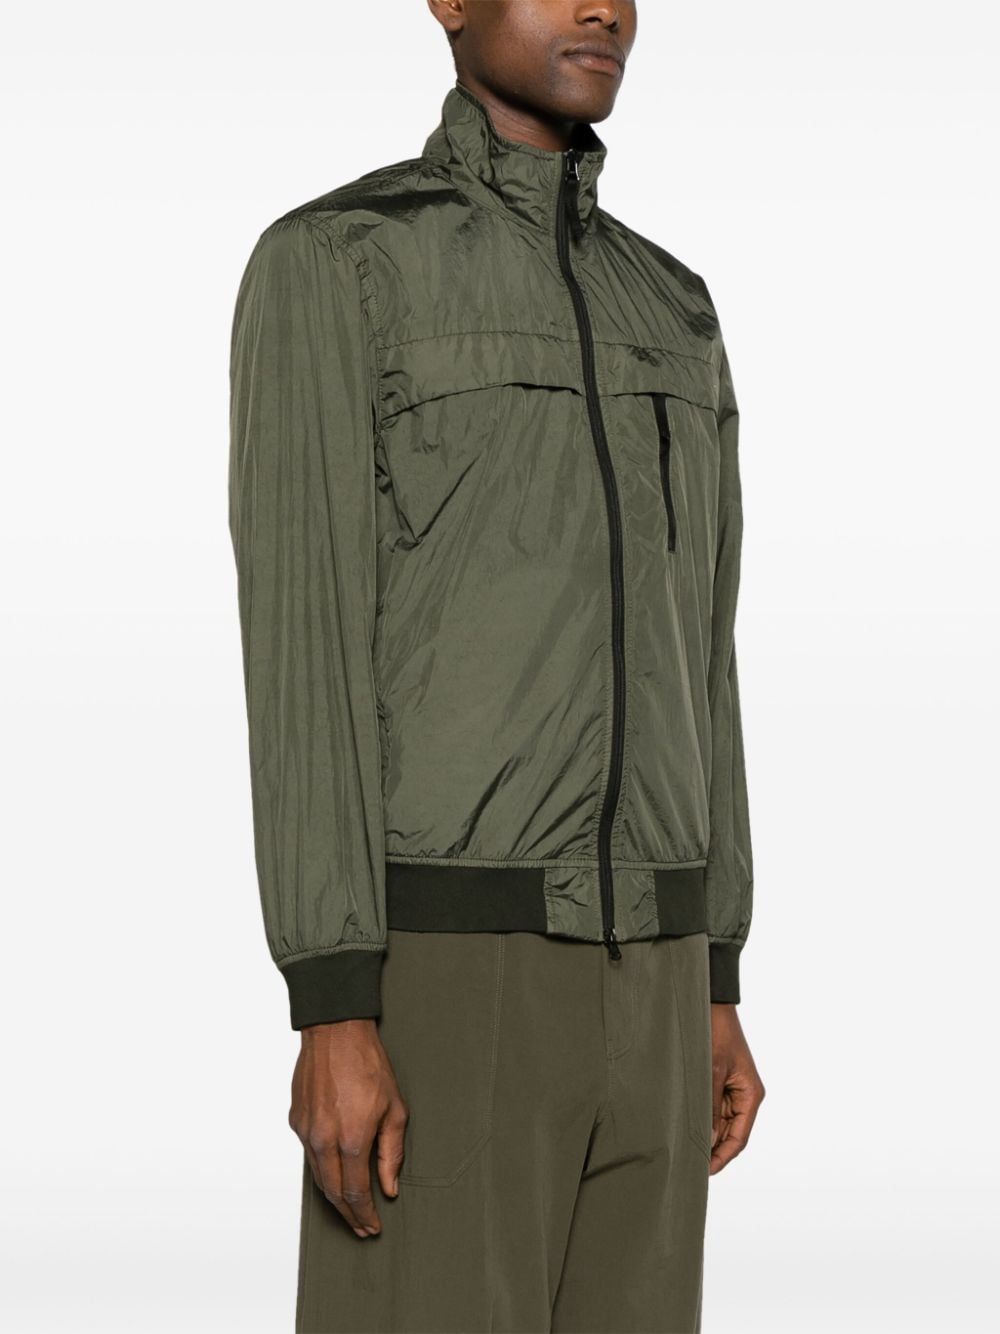 Military Green Crinkled Reps Jacket for Men